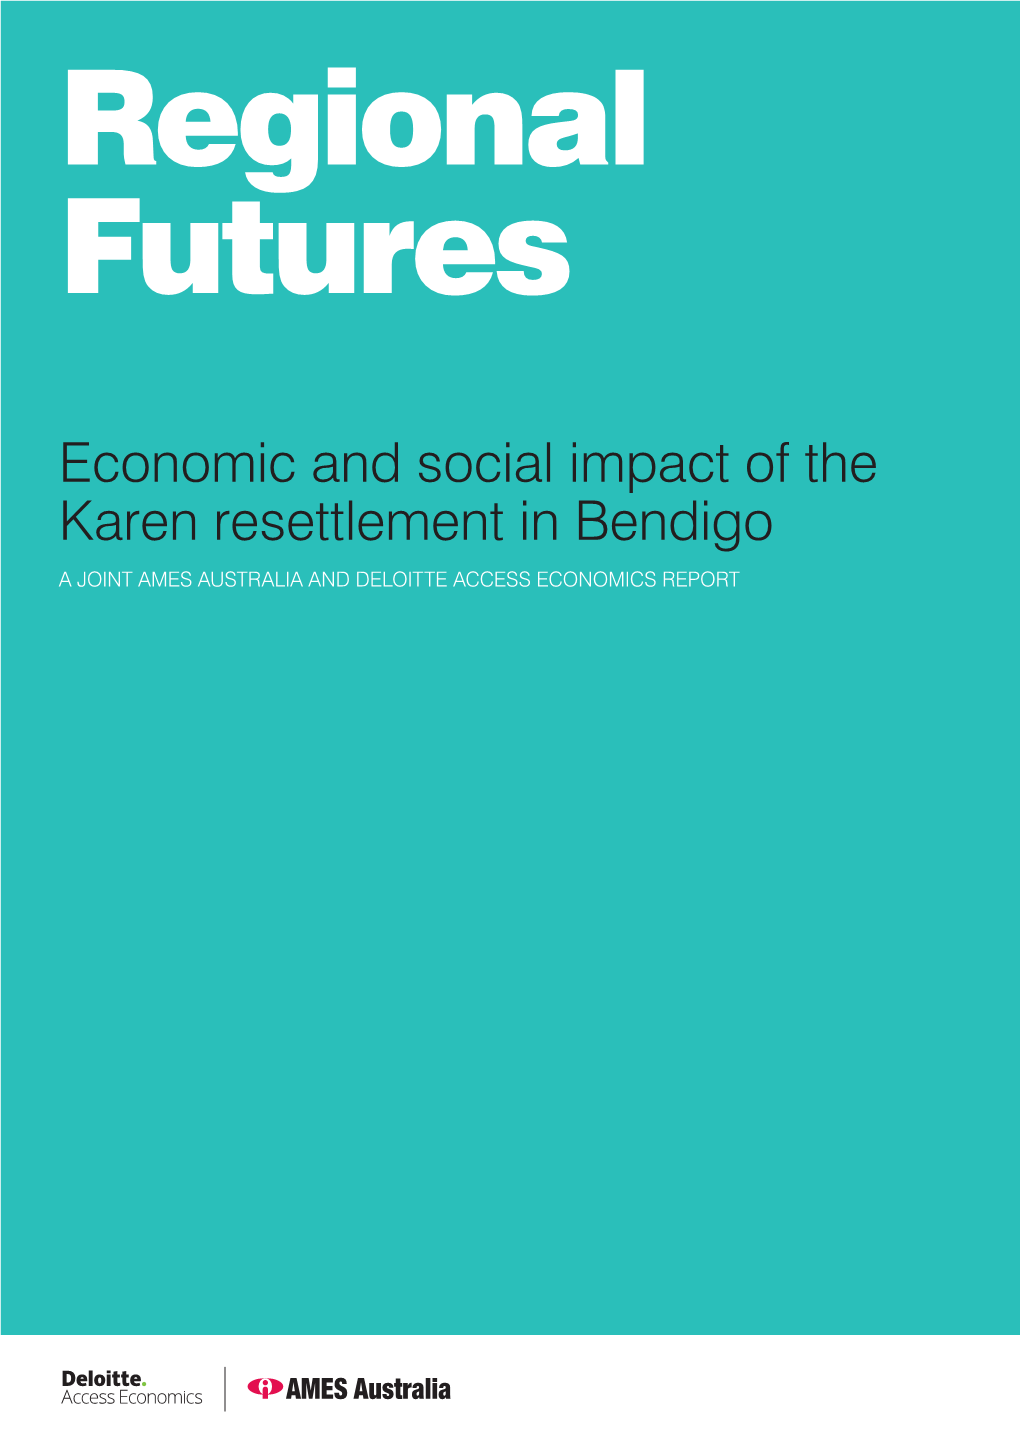 Economic and Social Impact of the Karen Resettlement in Bendigo a JOINT AMES AUSTRALIA and DELOITTE ACCESS ECONOMICS REPORT CONTENTS